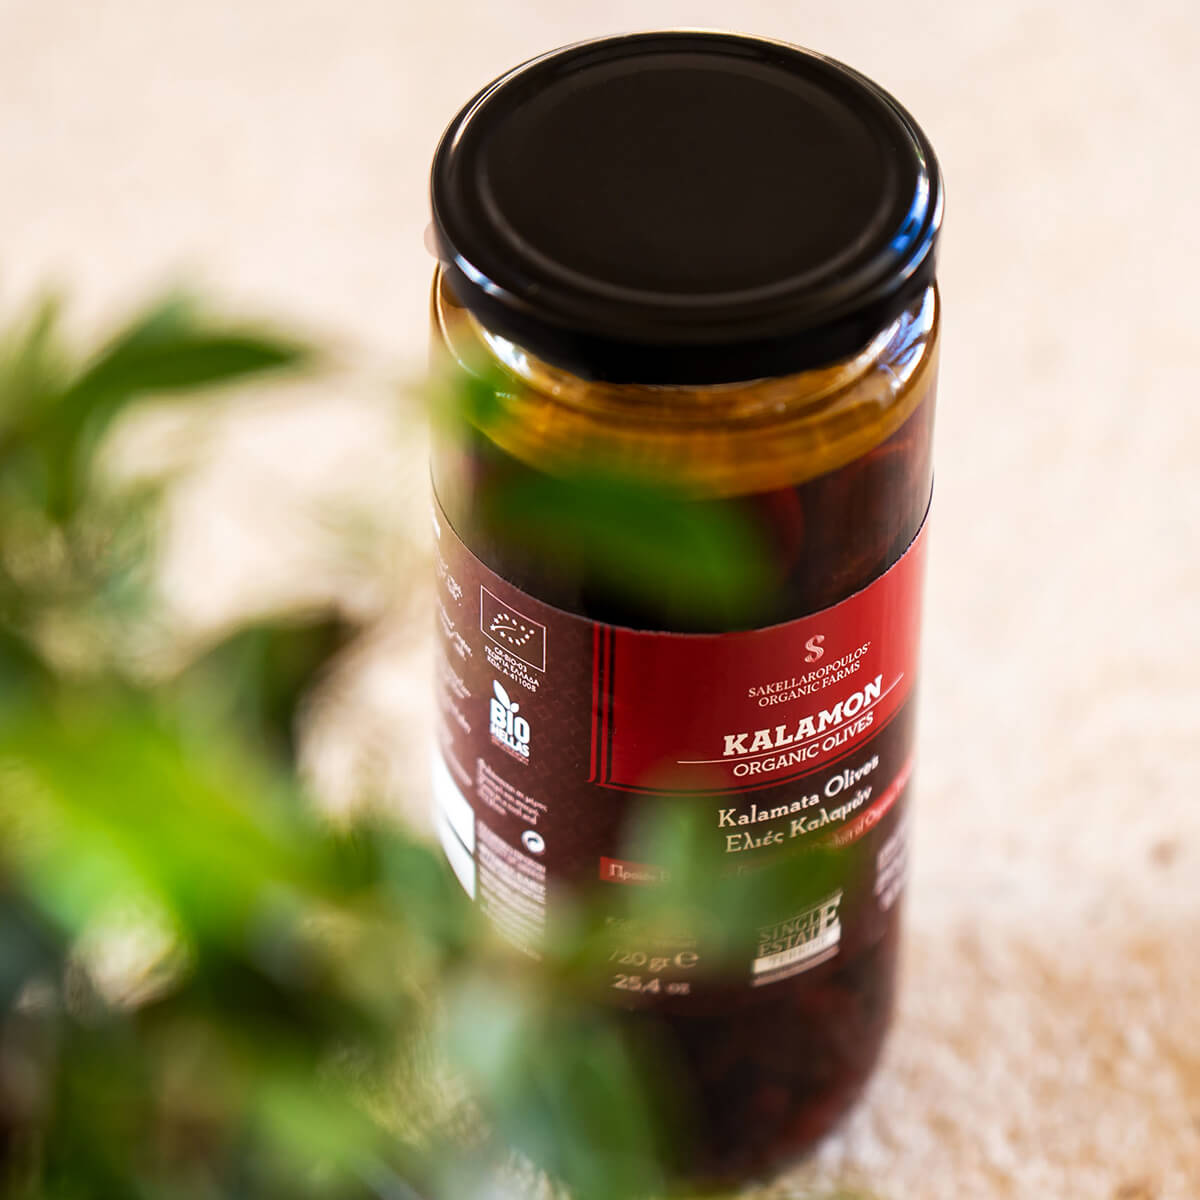 Gourmet Organic top kalamata olives unpasteurized natural greek tyrosol polyphenols